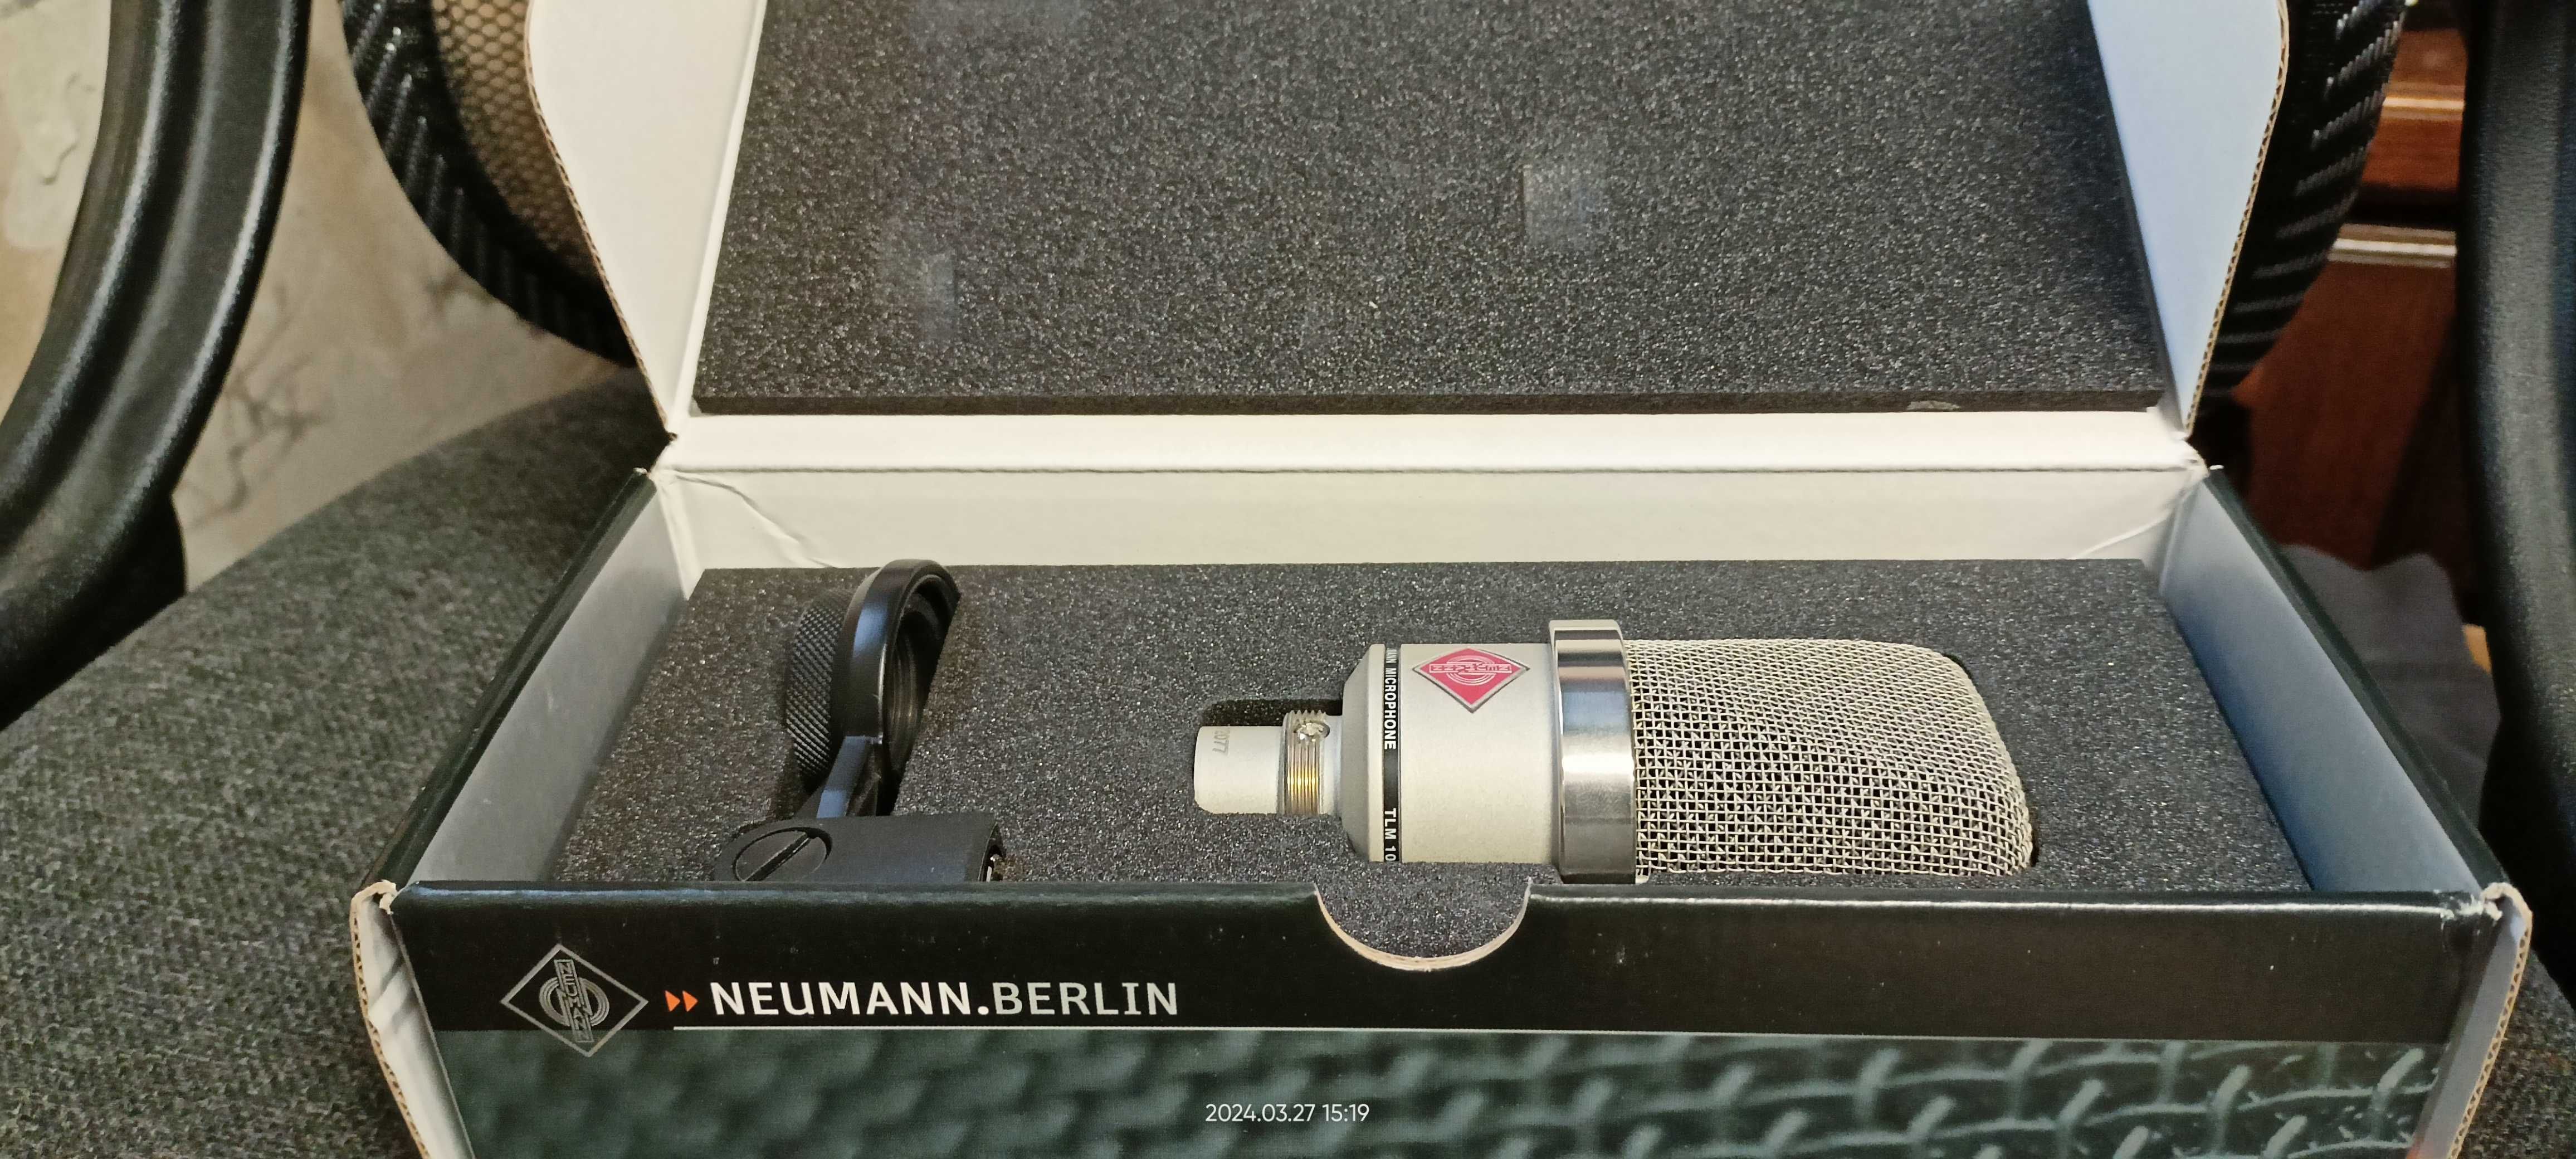 Mikrofon Neumann TLM 102 jak nowy!!!